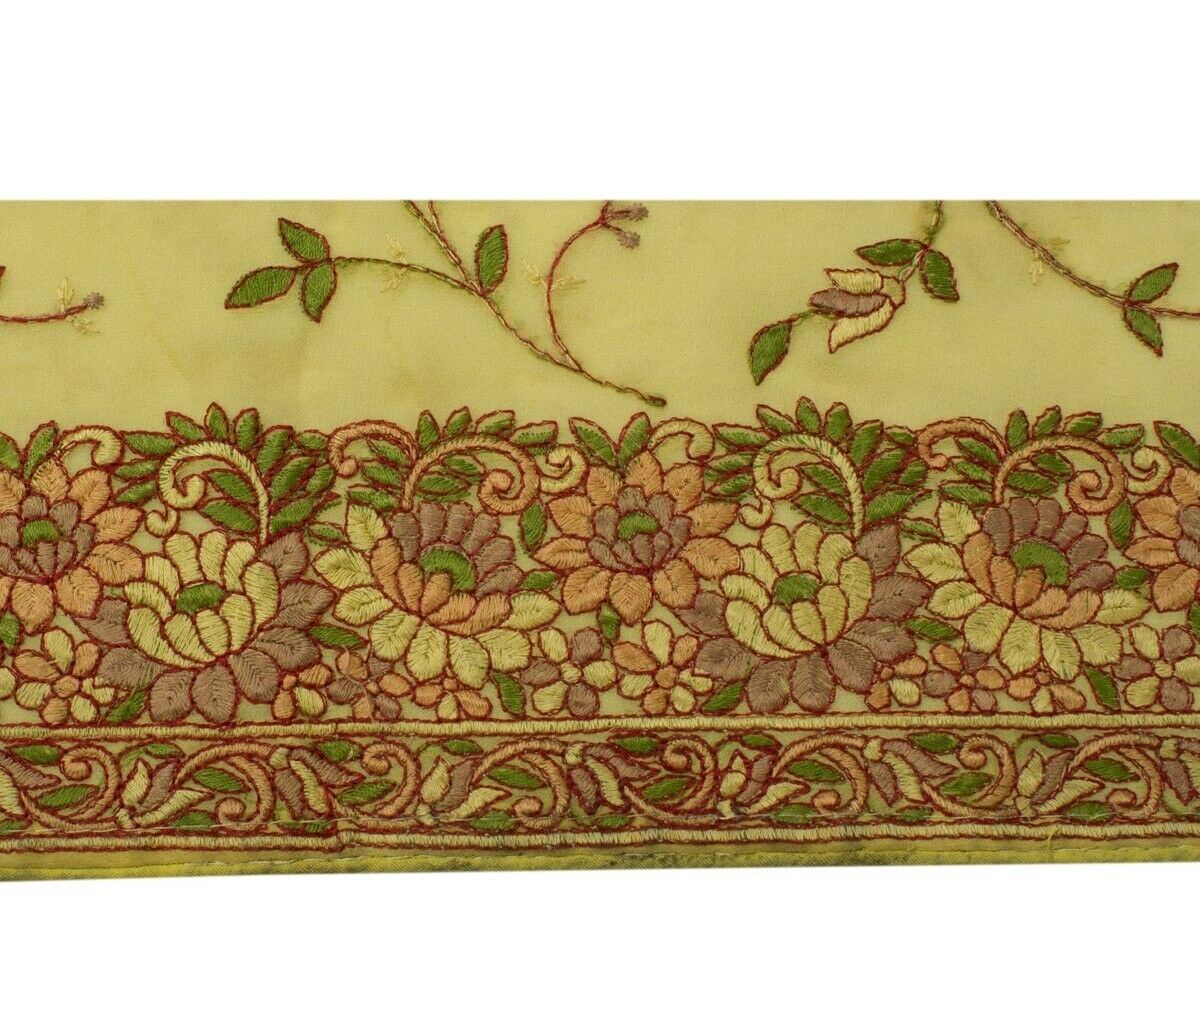 Vintage Sari Border Indian Craft Sewing Trim Embroidered Green Ribbon Lace